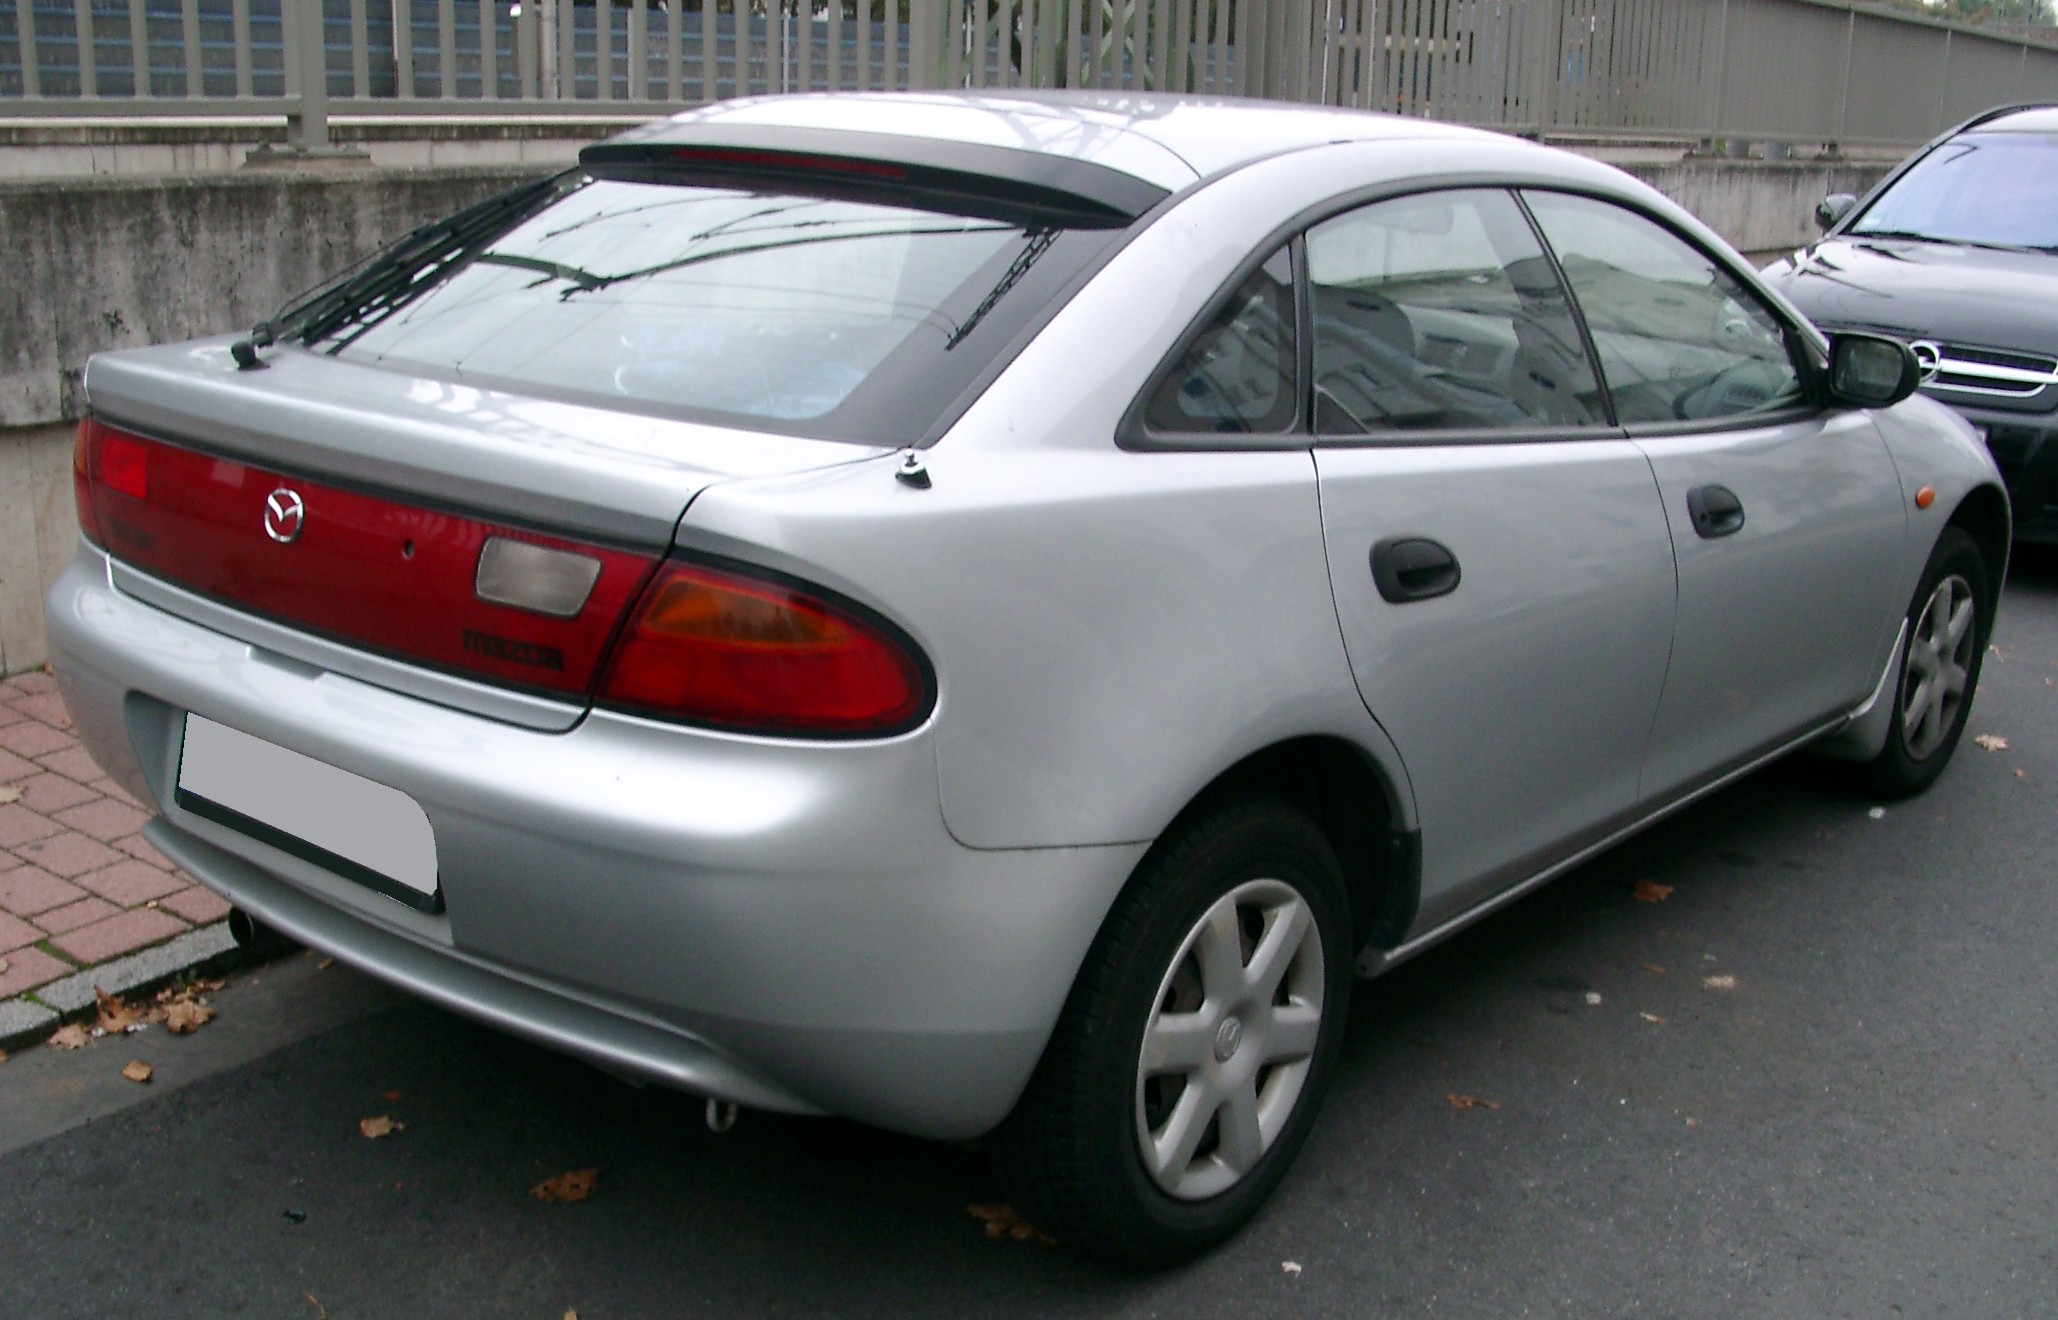 File:Mazda 323f rear 20071002.jpg - Wikimedia Commons